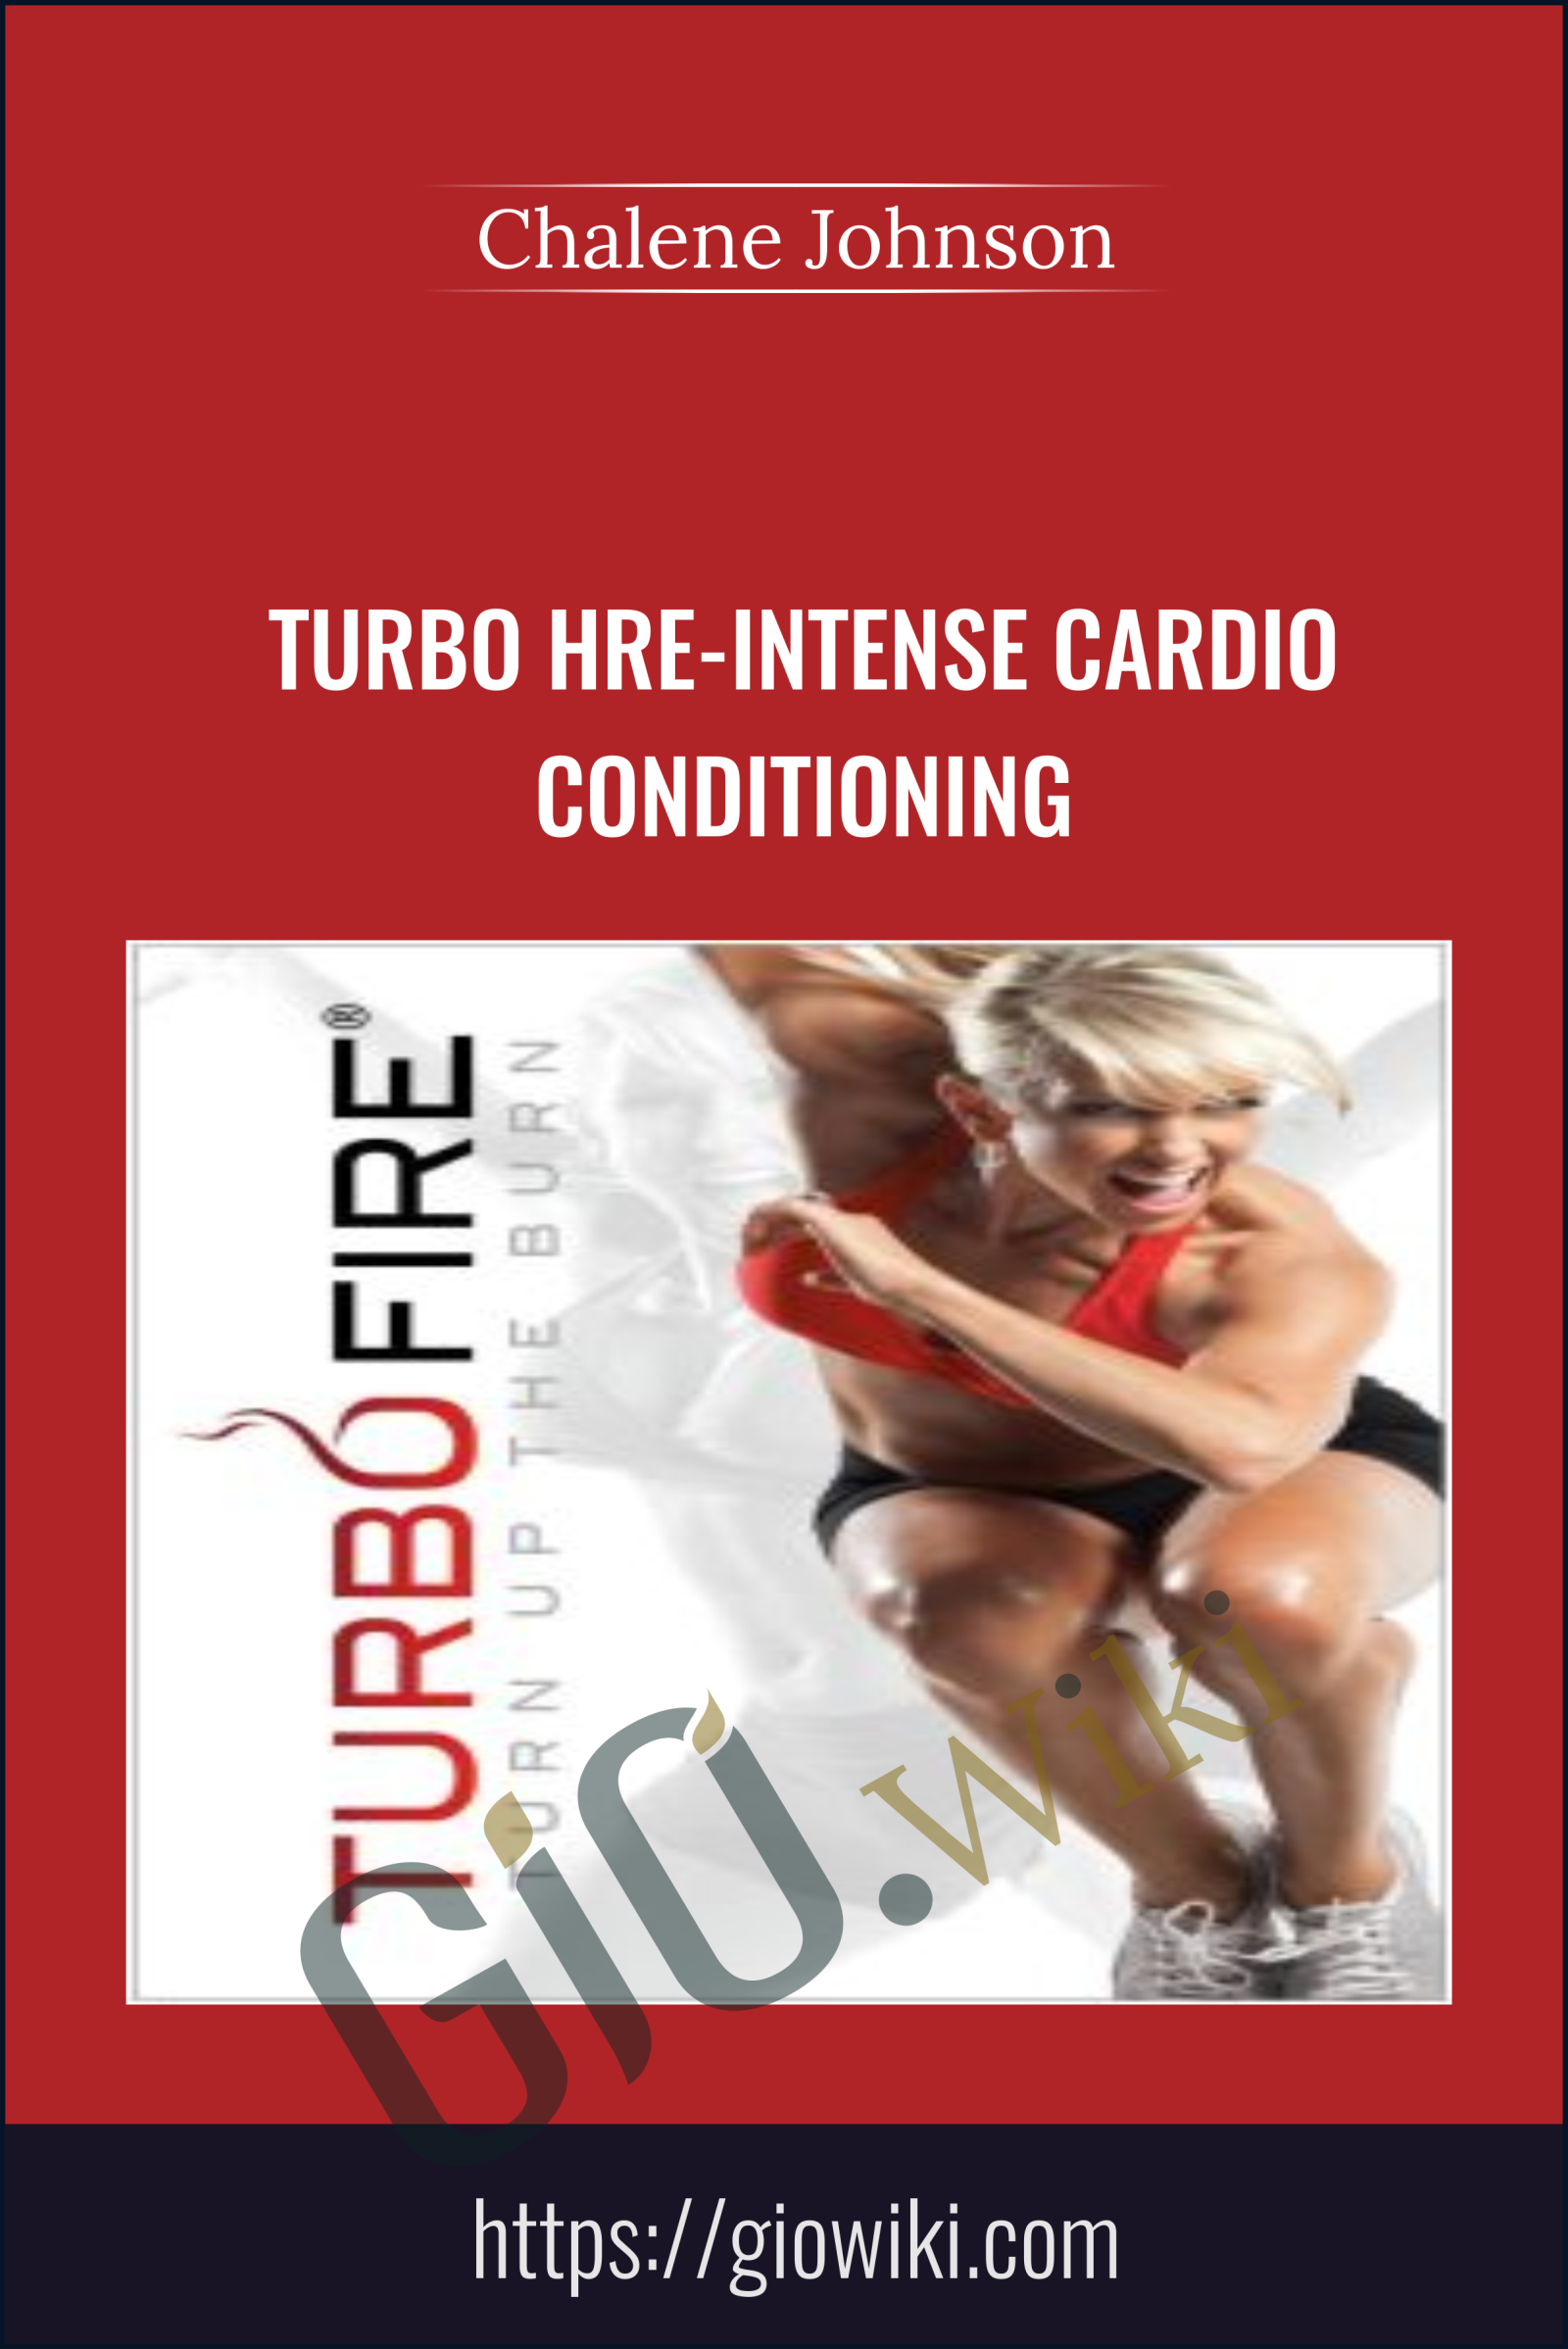 Turbo Hre-Intense Cardio Conditioning - Chalene Johnson